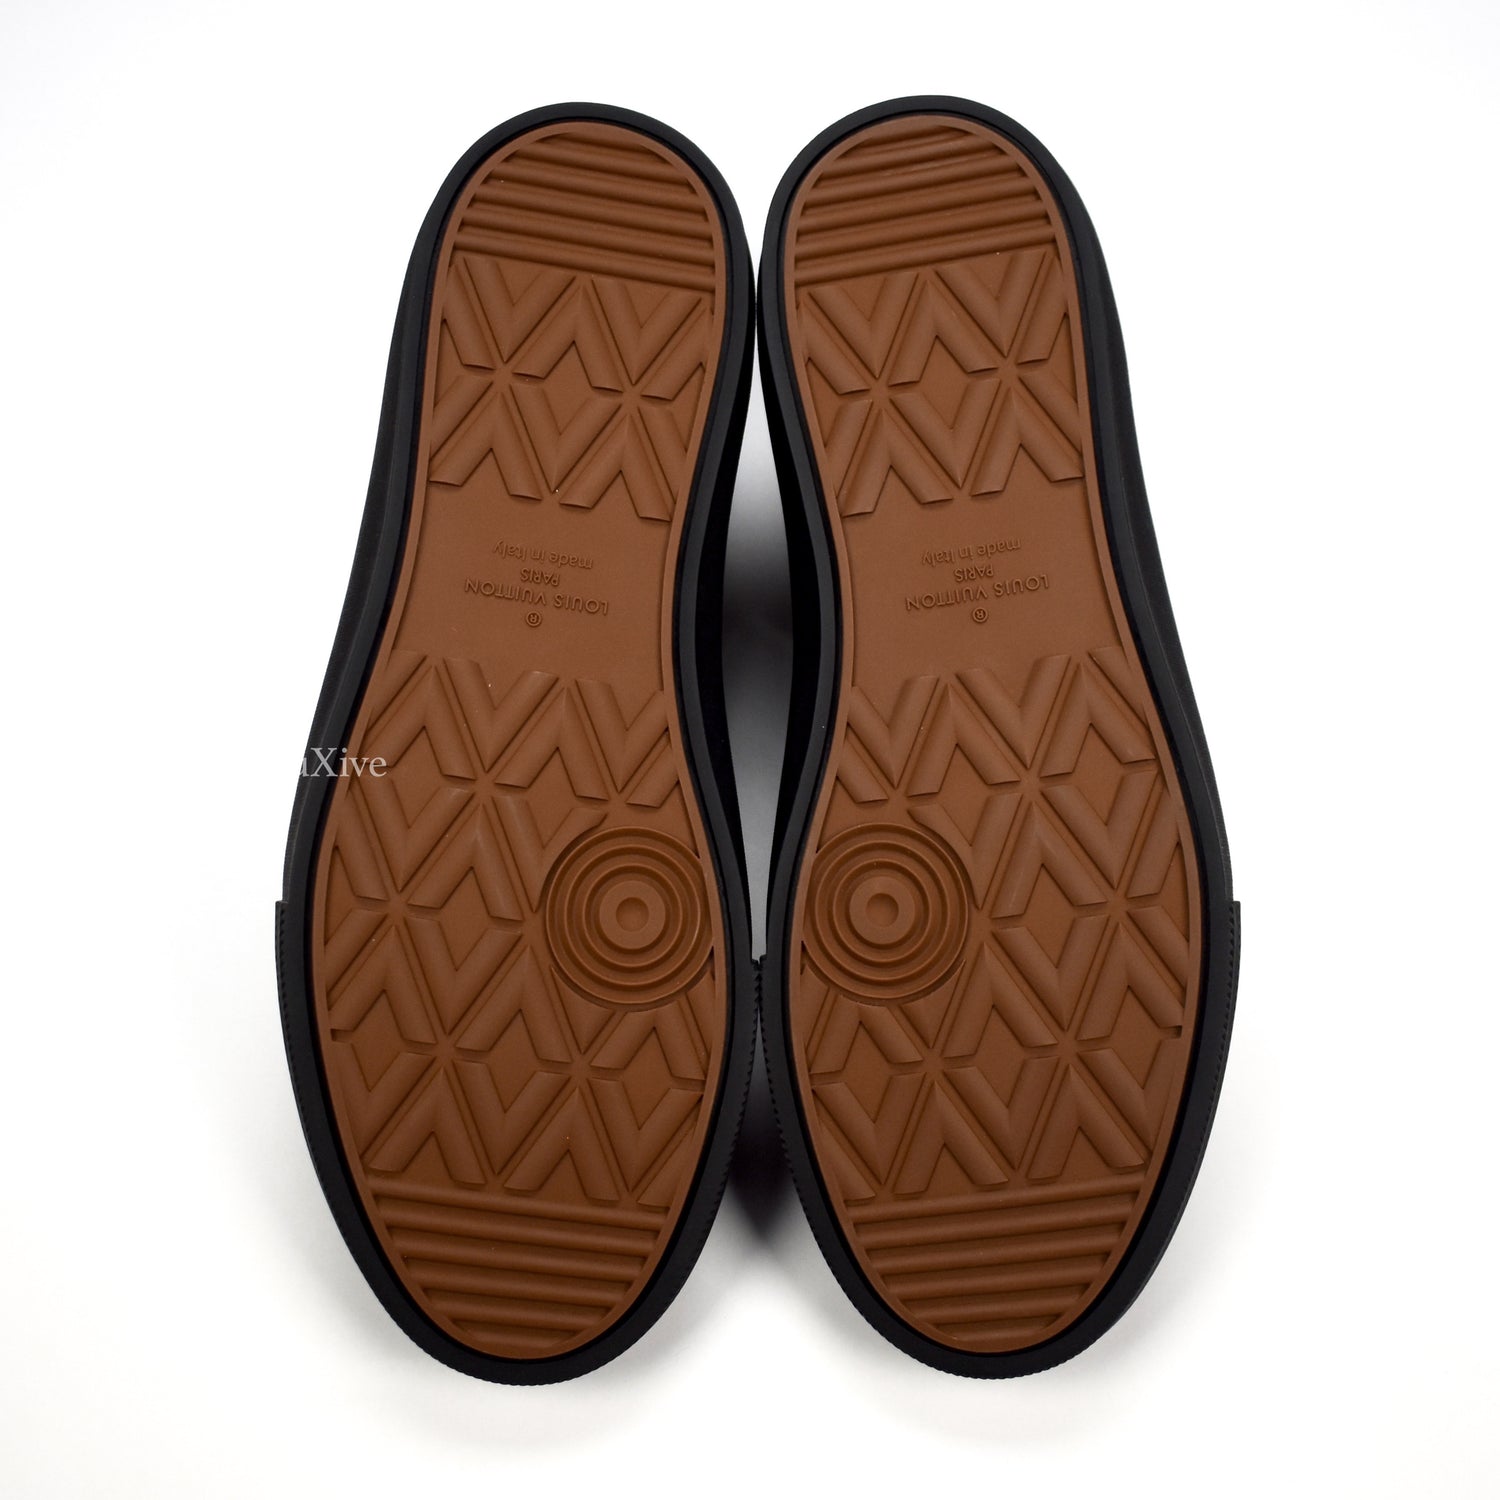 Louis Vuitton Trocadero Vans Sneaker Review & On-Feet 